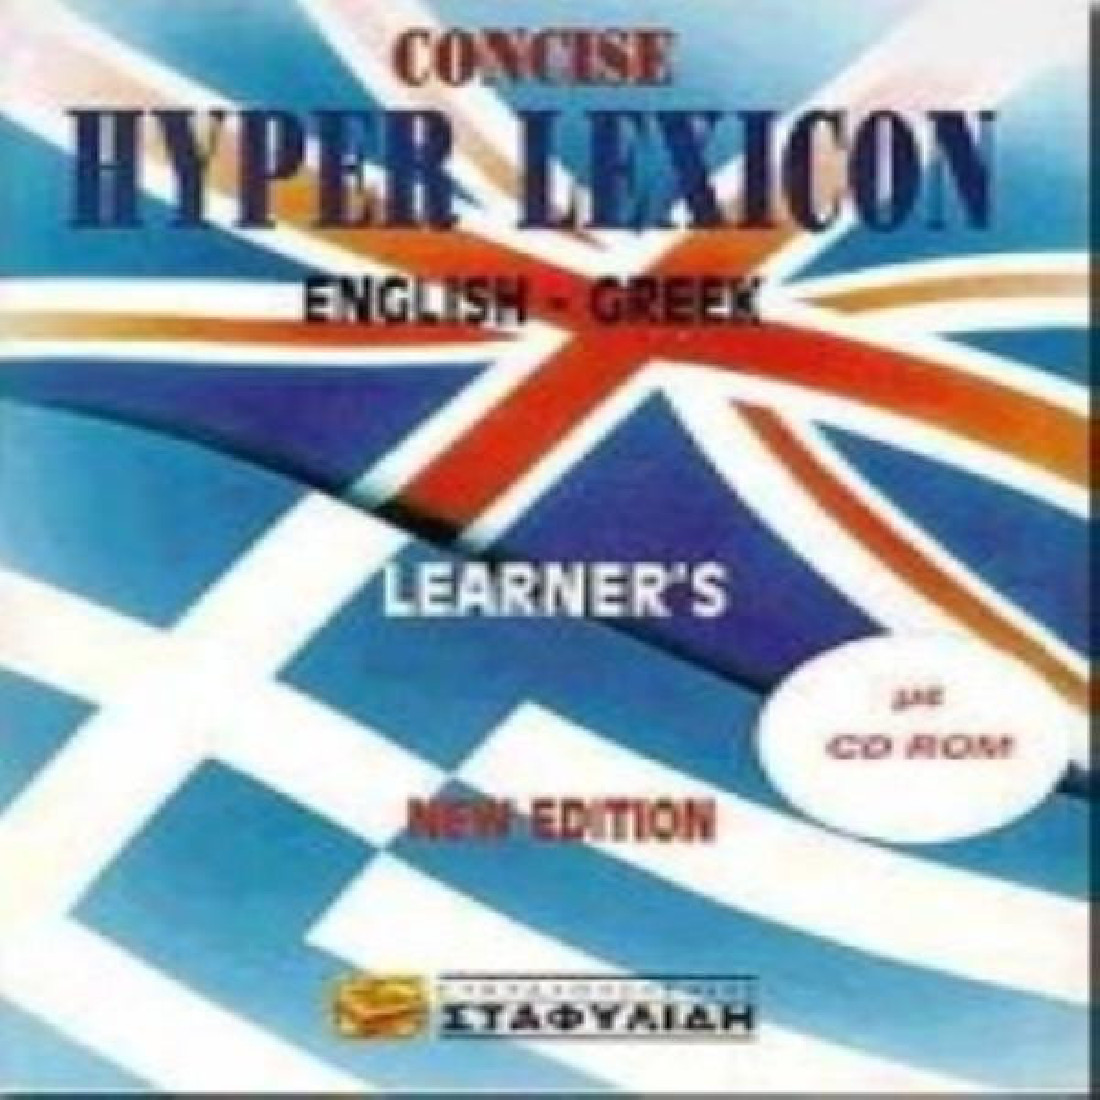 CONCISE HYPER LEXICON ENGLISH GREEK (NEW EDITION)(